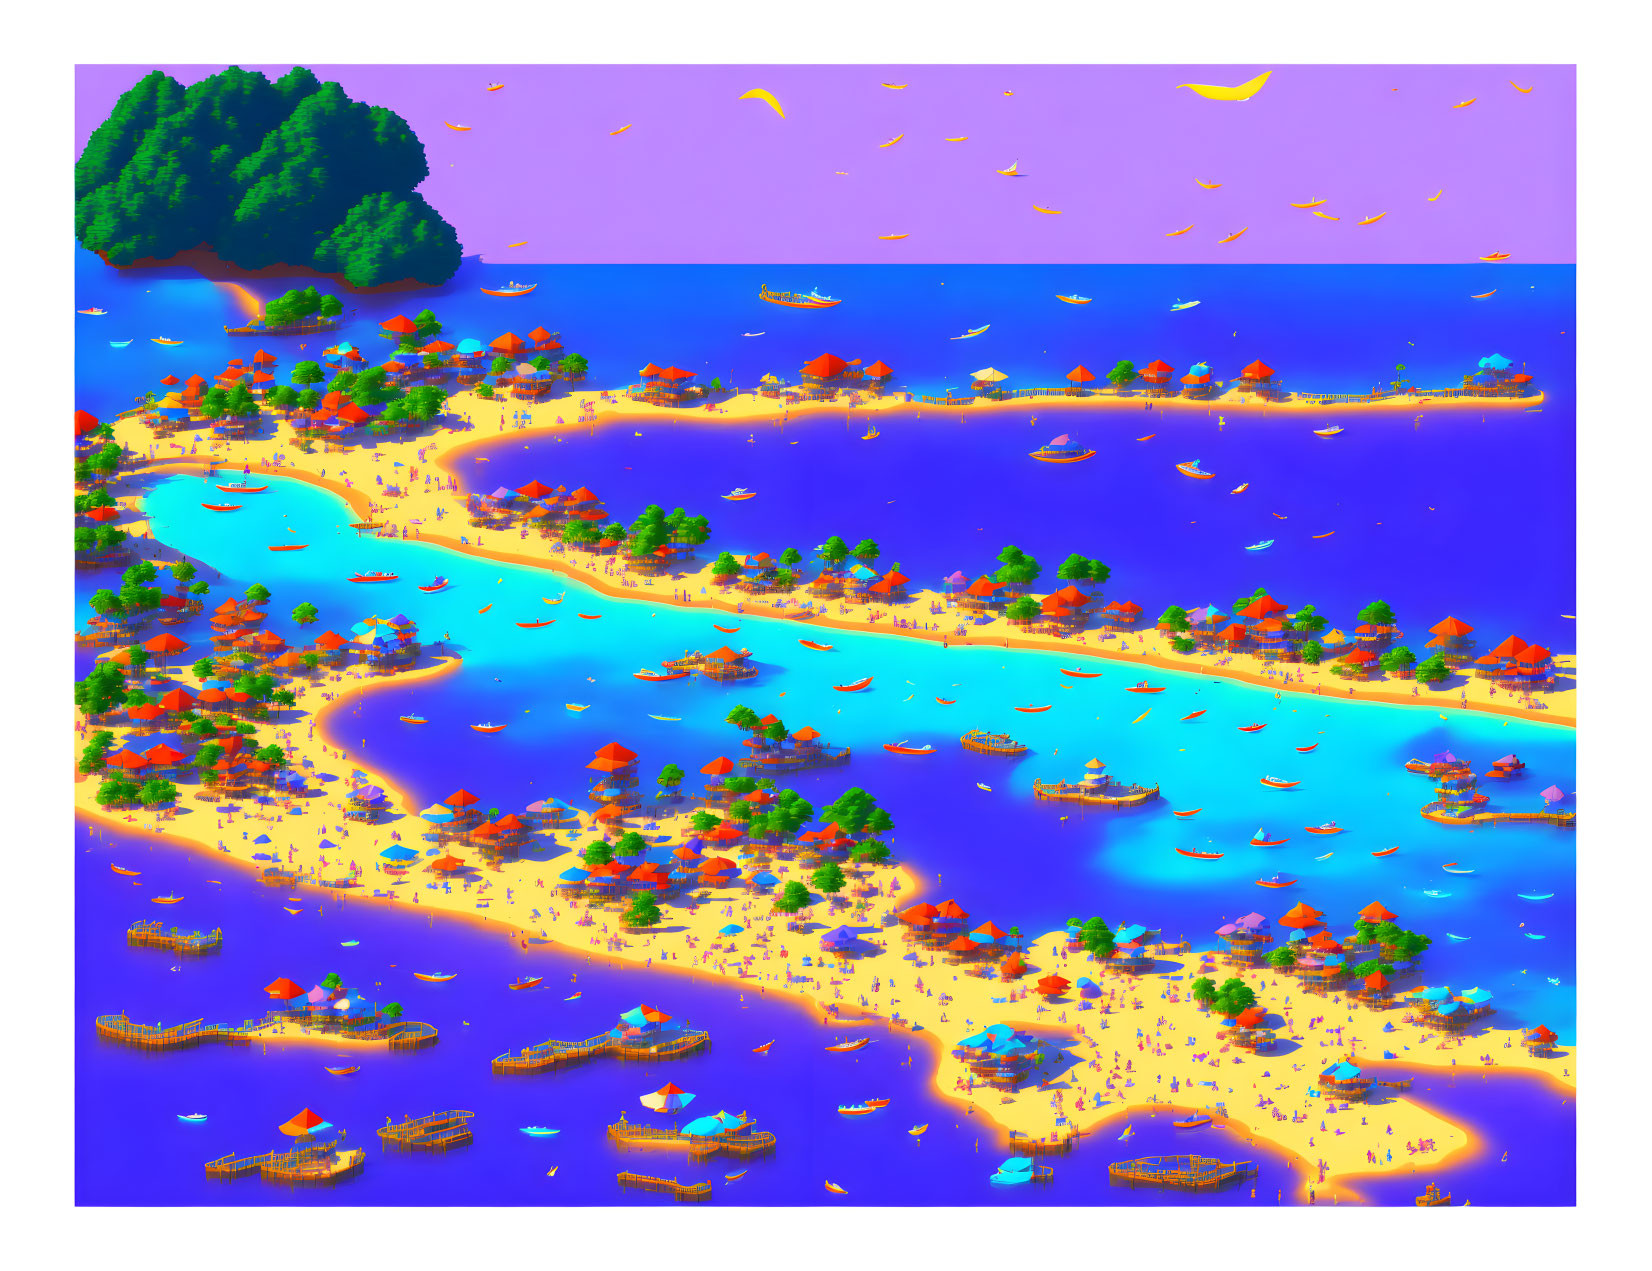 Pixel beach party 